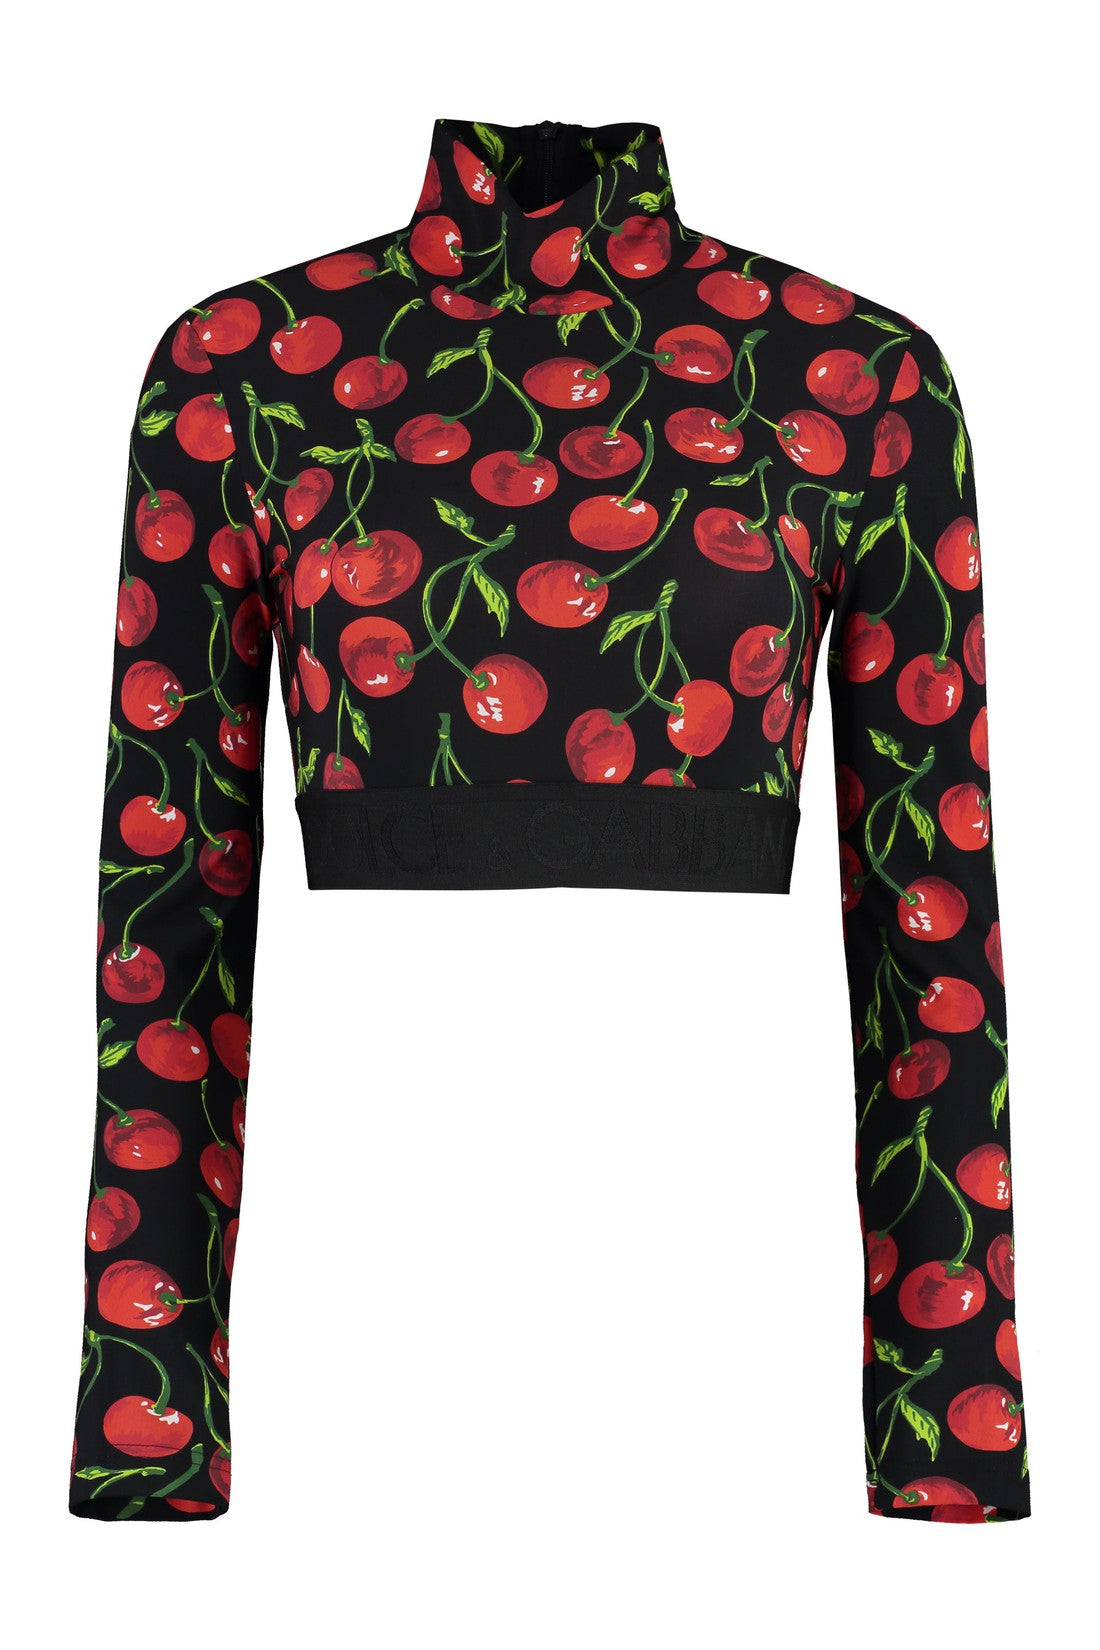 Dolce & Gabbana-OUTLET-SALE-Long sleeve crop top-ARCHIVIST